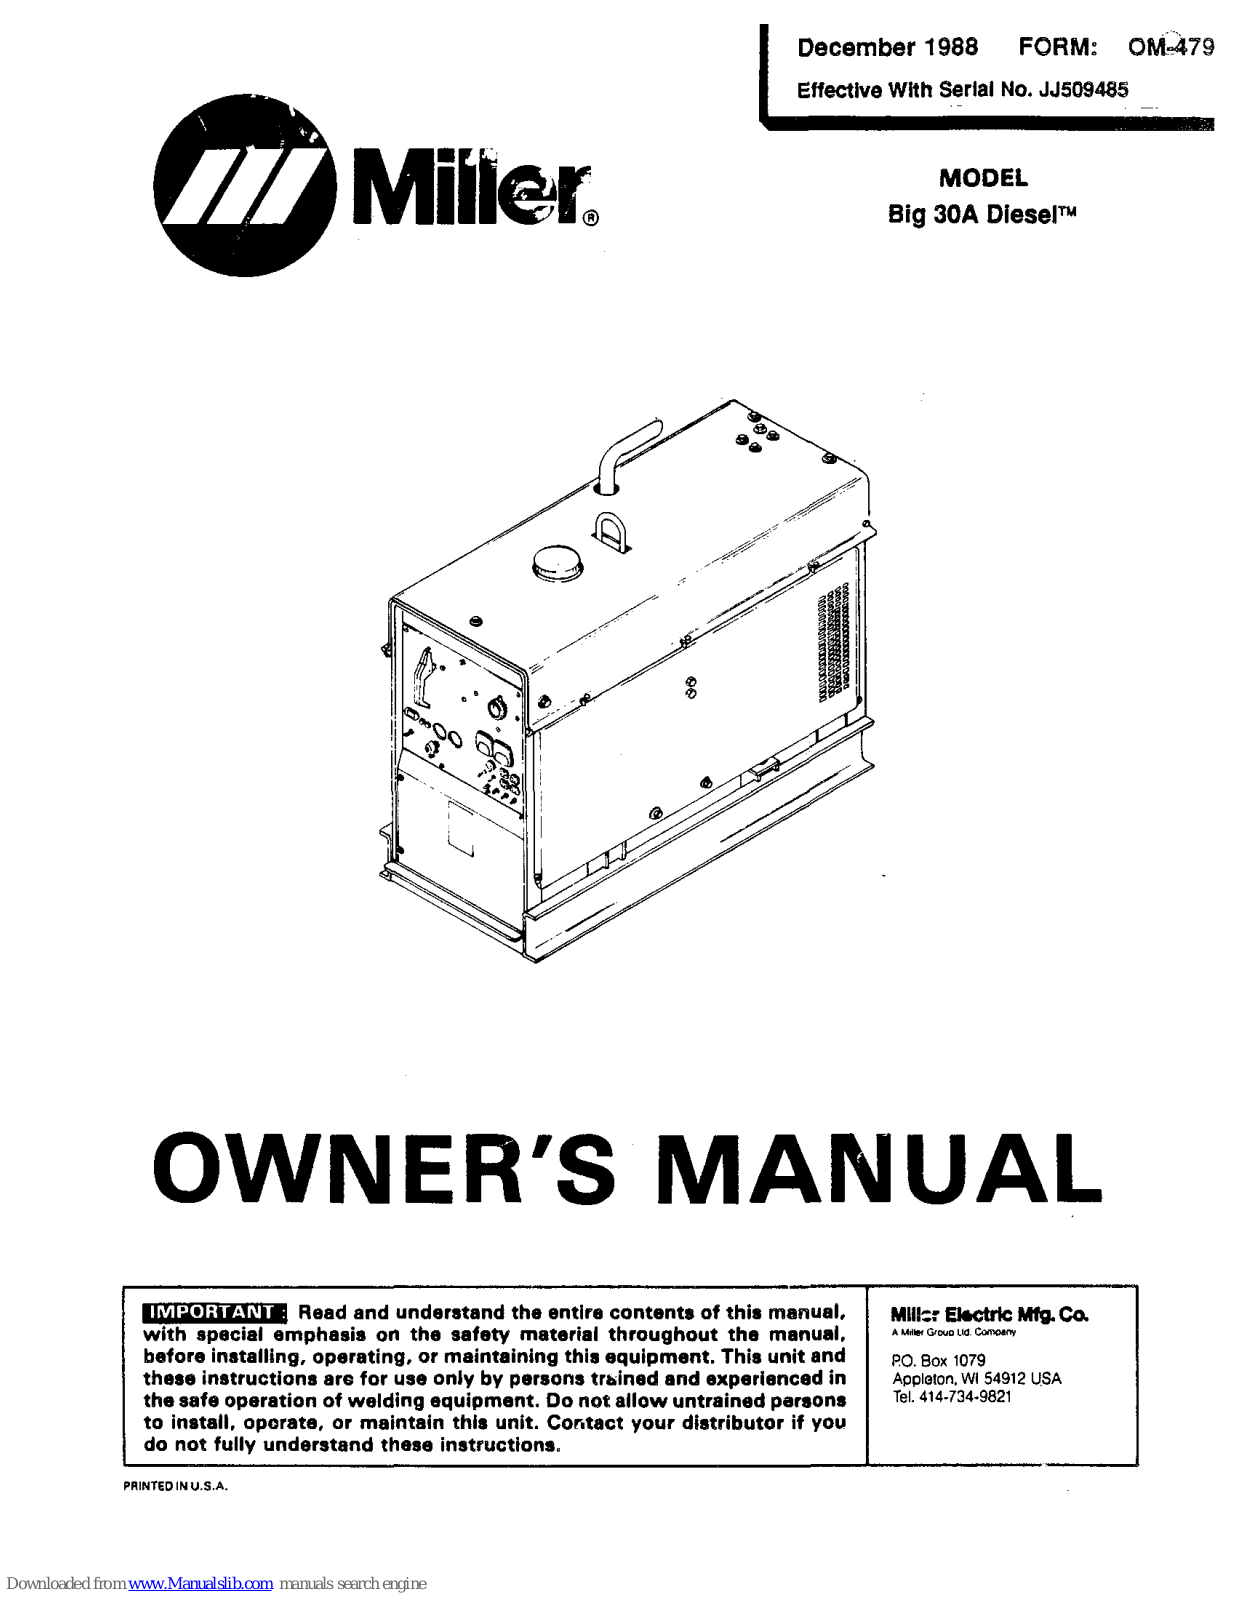 Miller 30a Owner's Manual